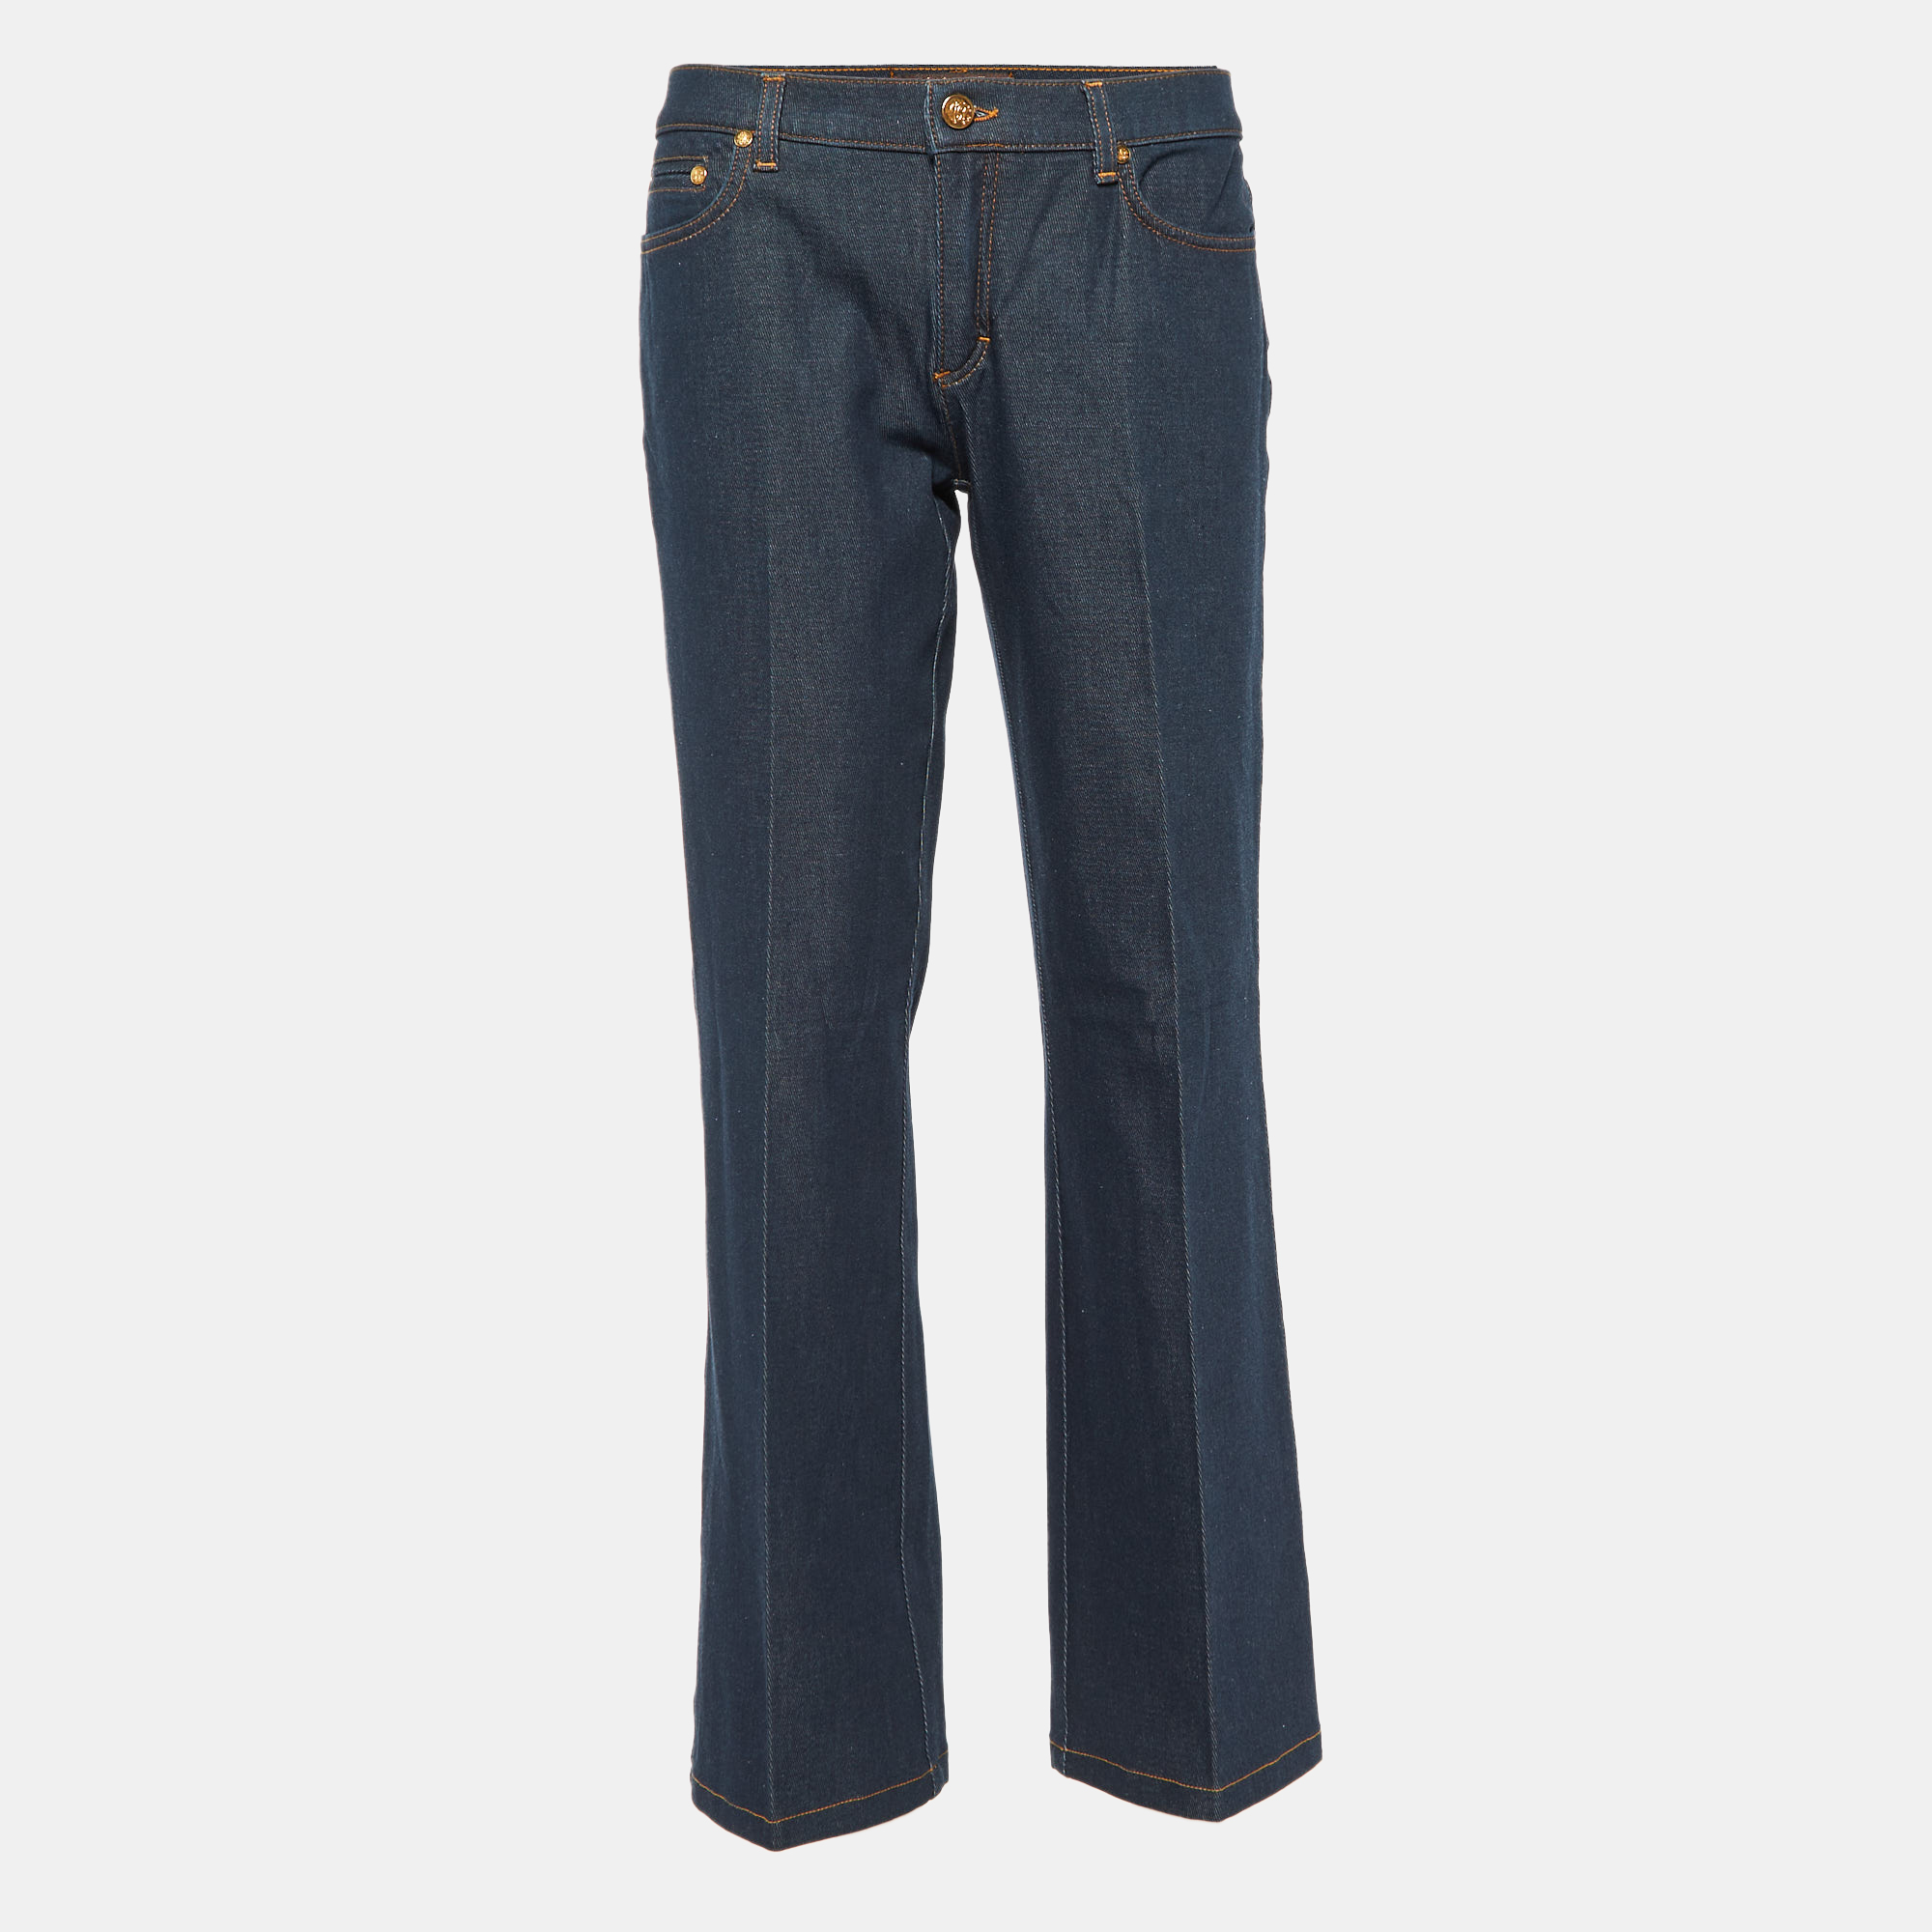 Pre-owned Roberto Cavalli Dark Blue Denim Flared Jeans M Waist 32"